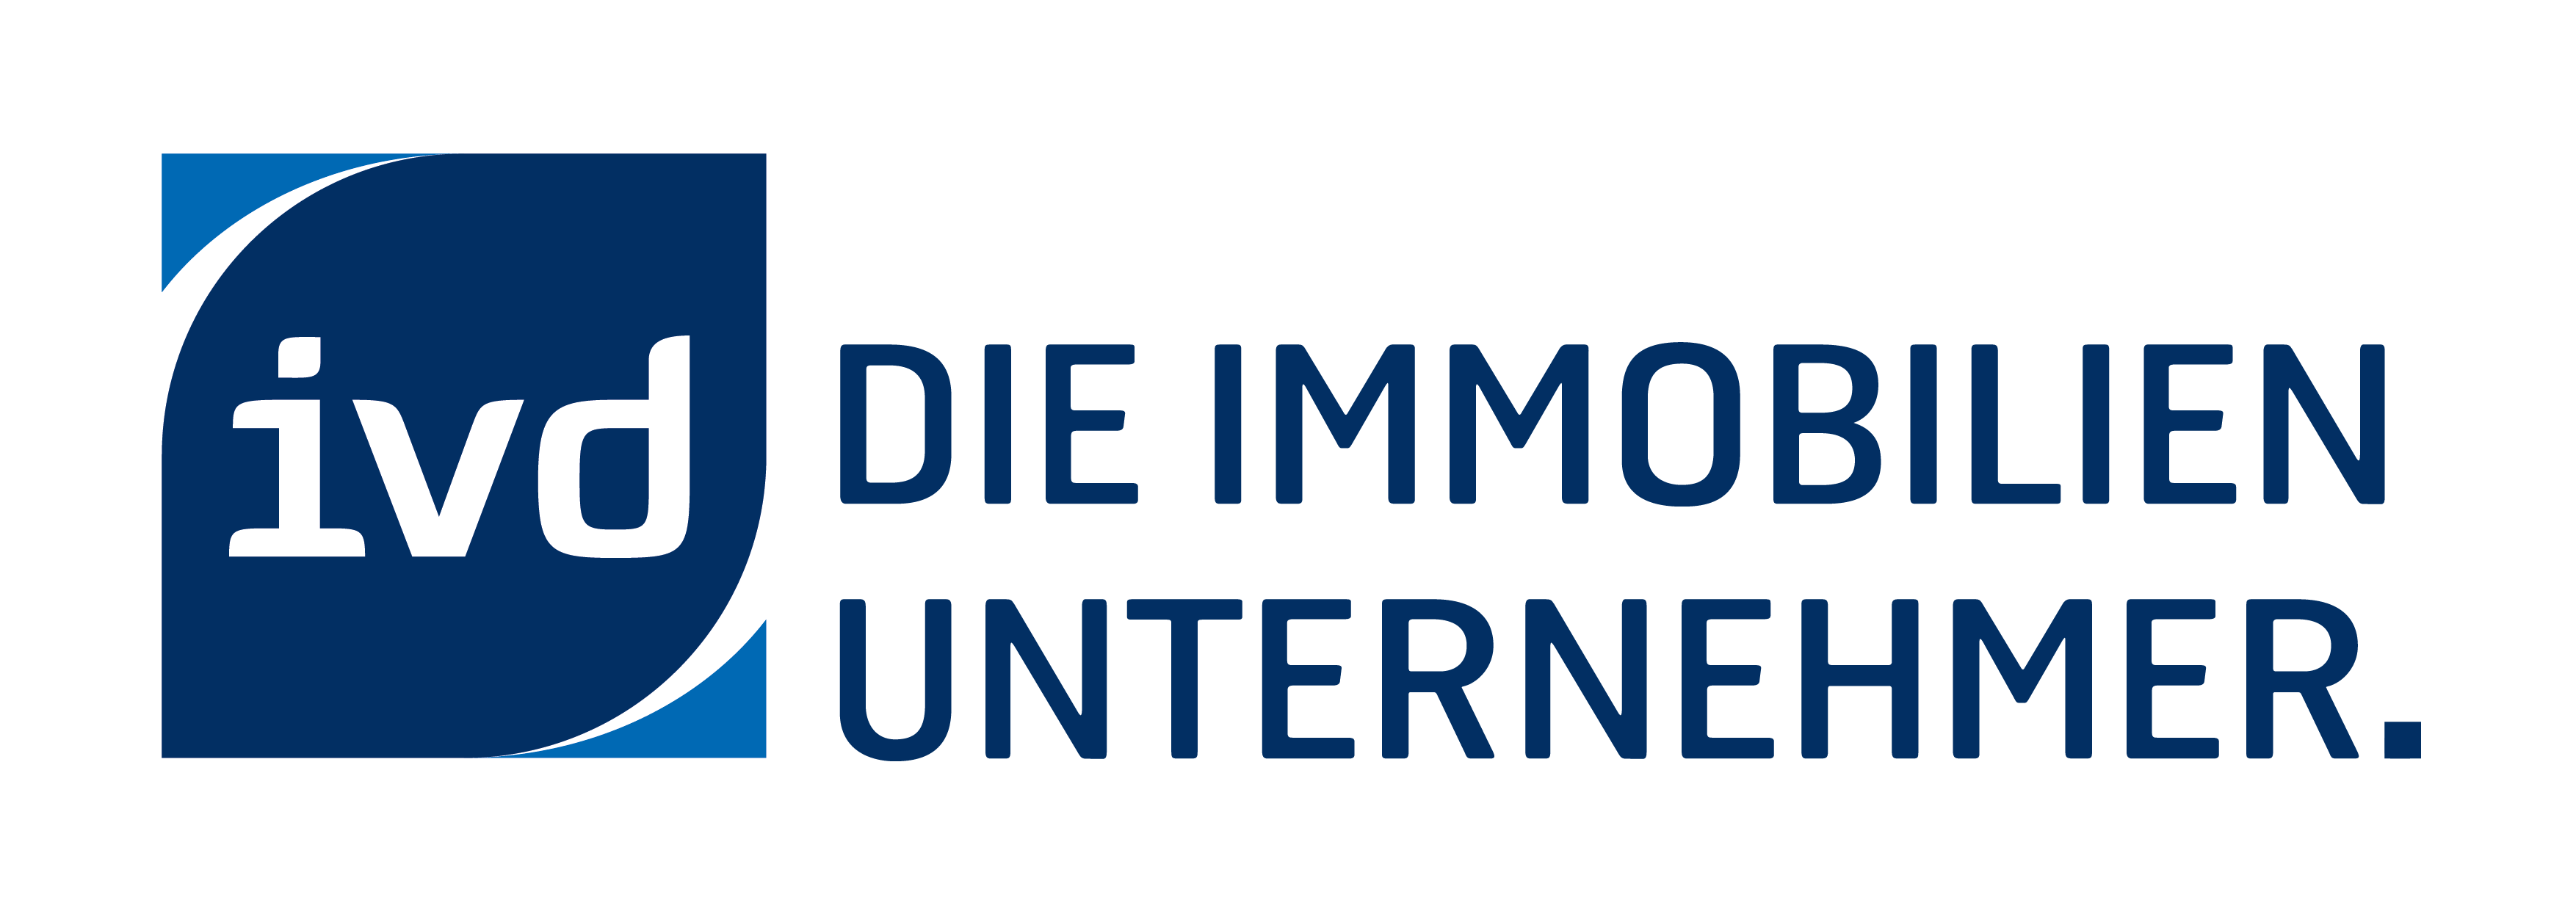 IVD-Logo-DieImmobilienunternehmer-CMYK.png